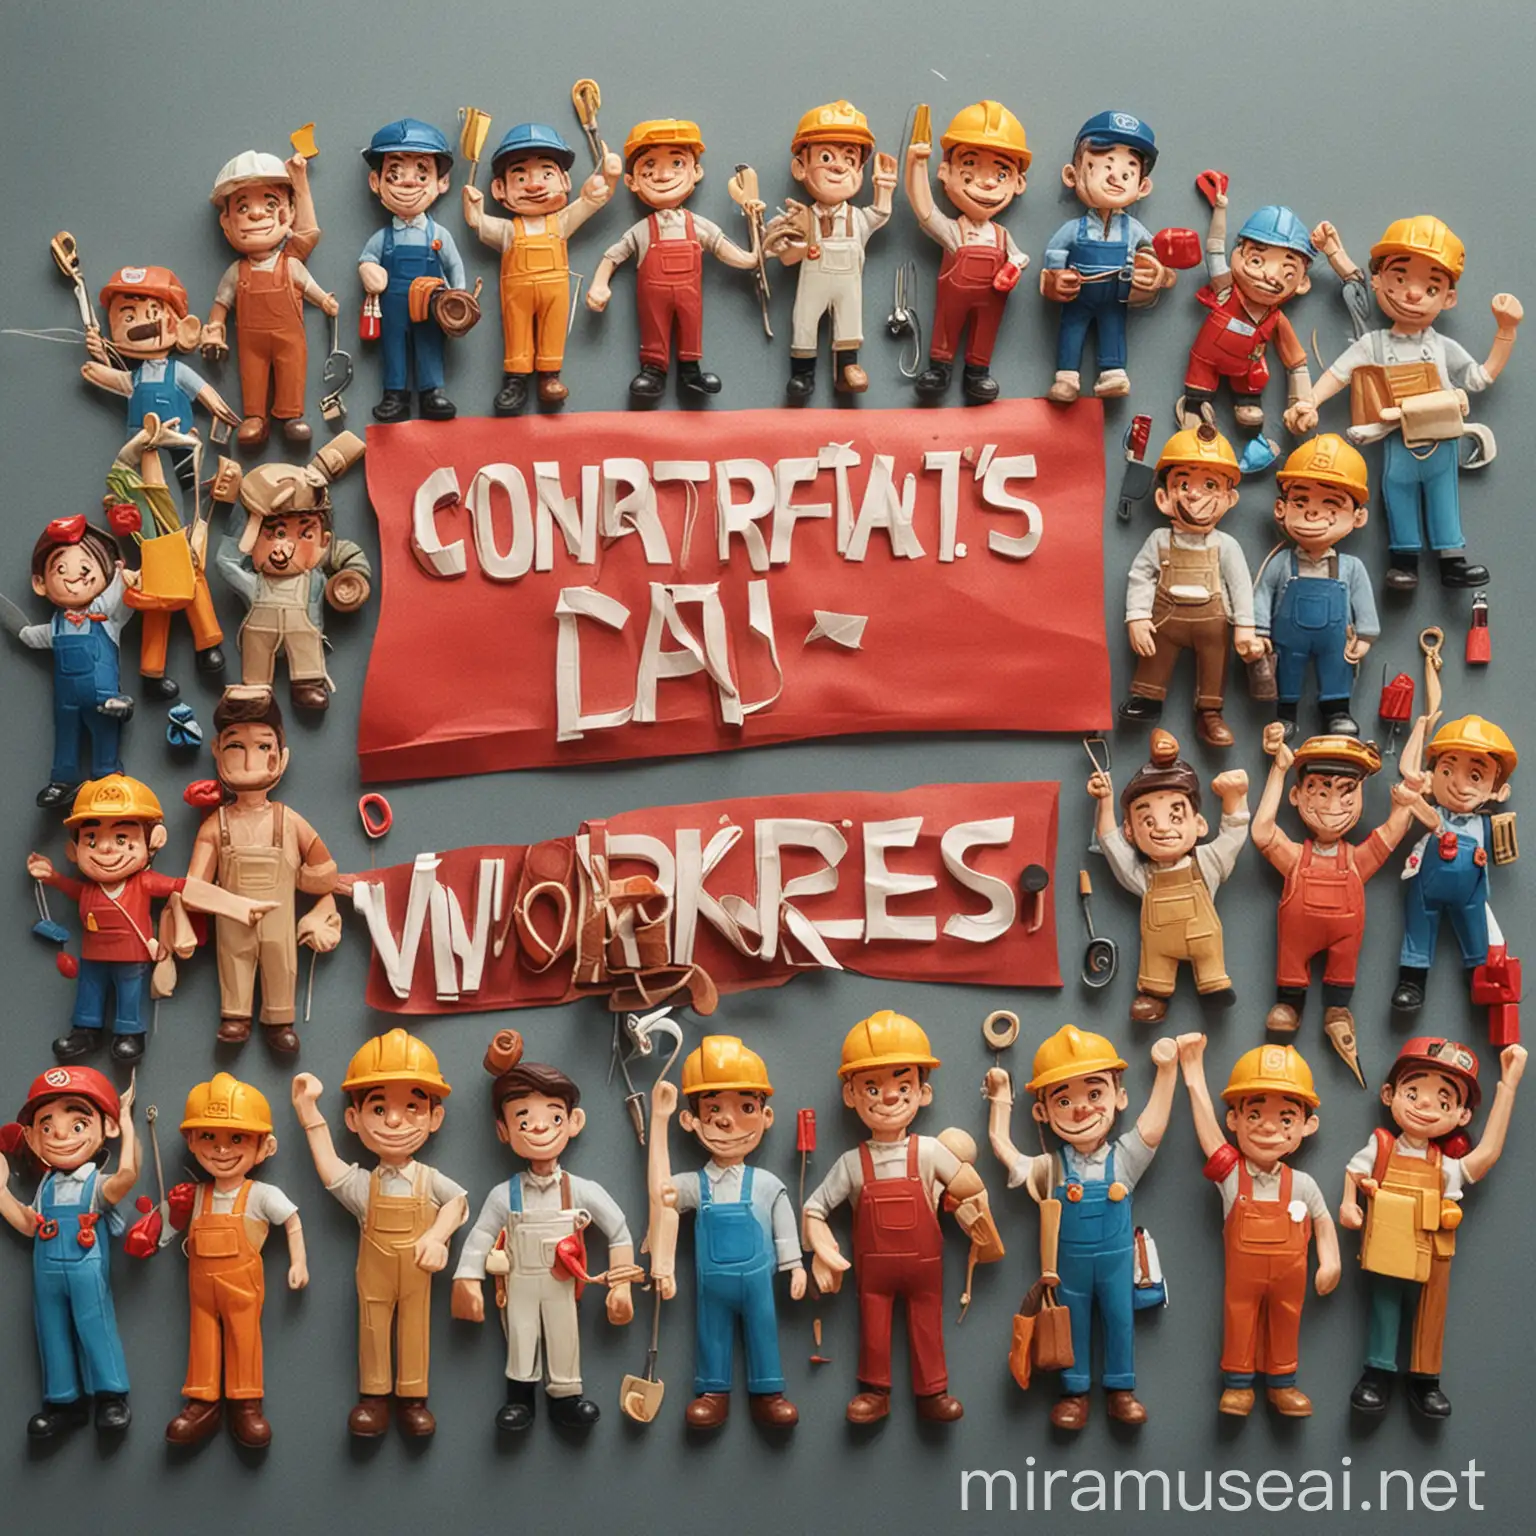 congratulation worker`s day
